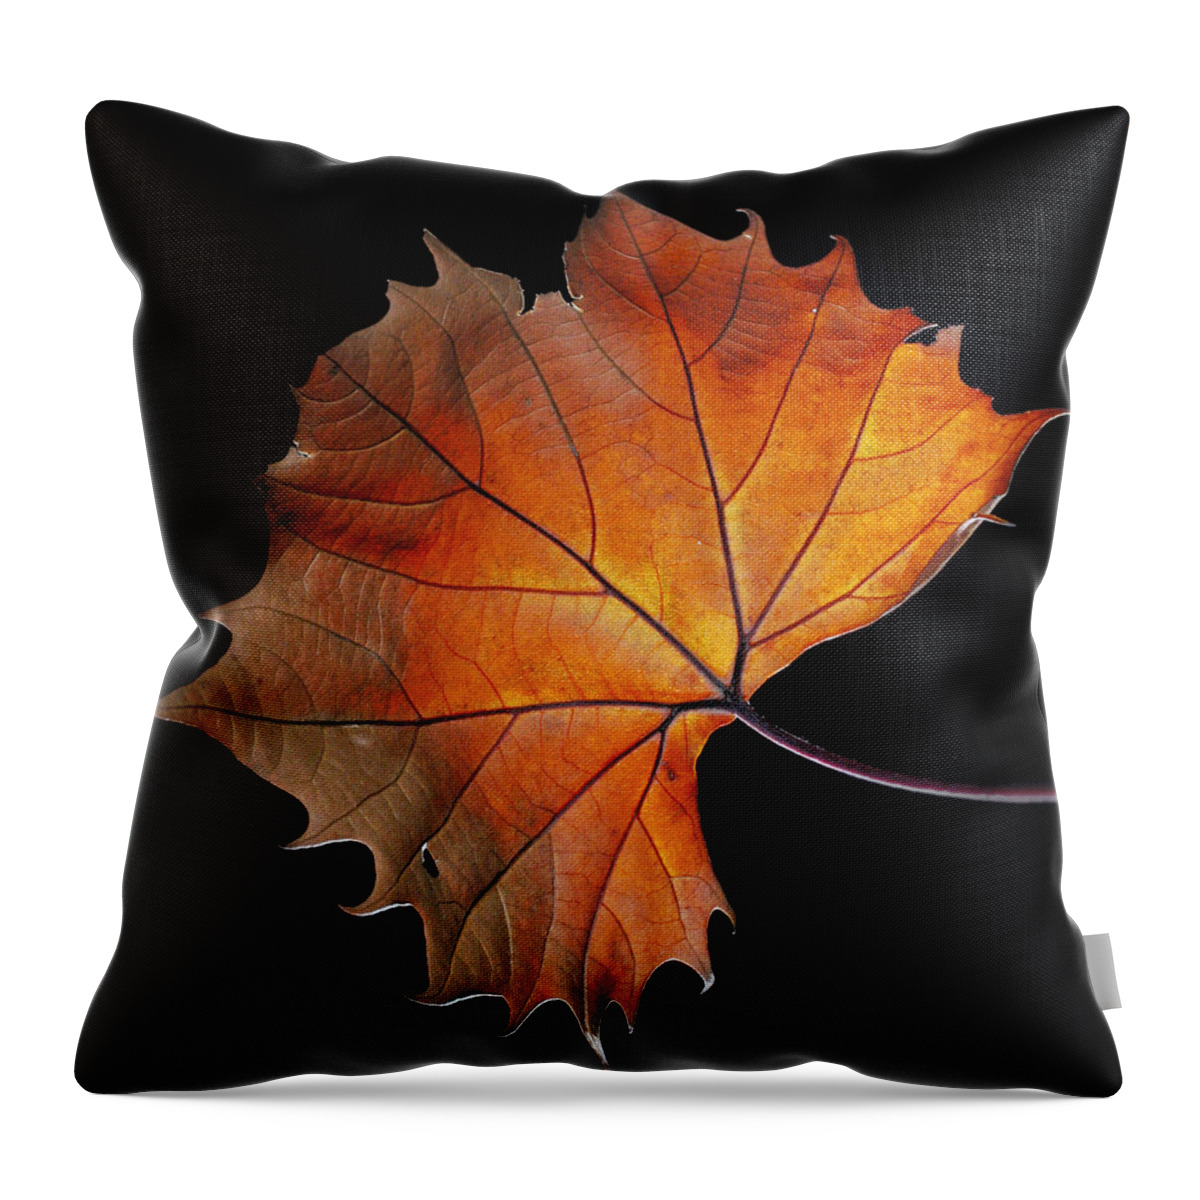 Leaf Throw Pillow featuring the photograph Fall by Robert Och